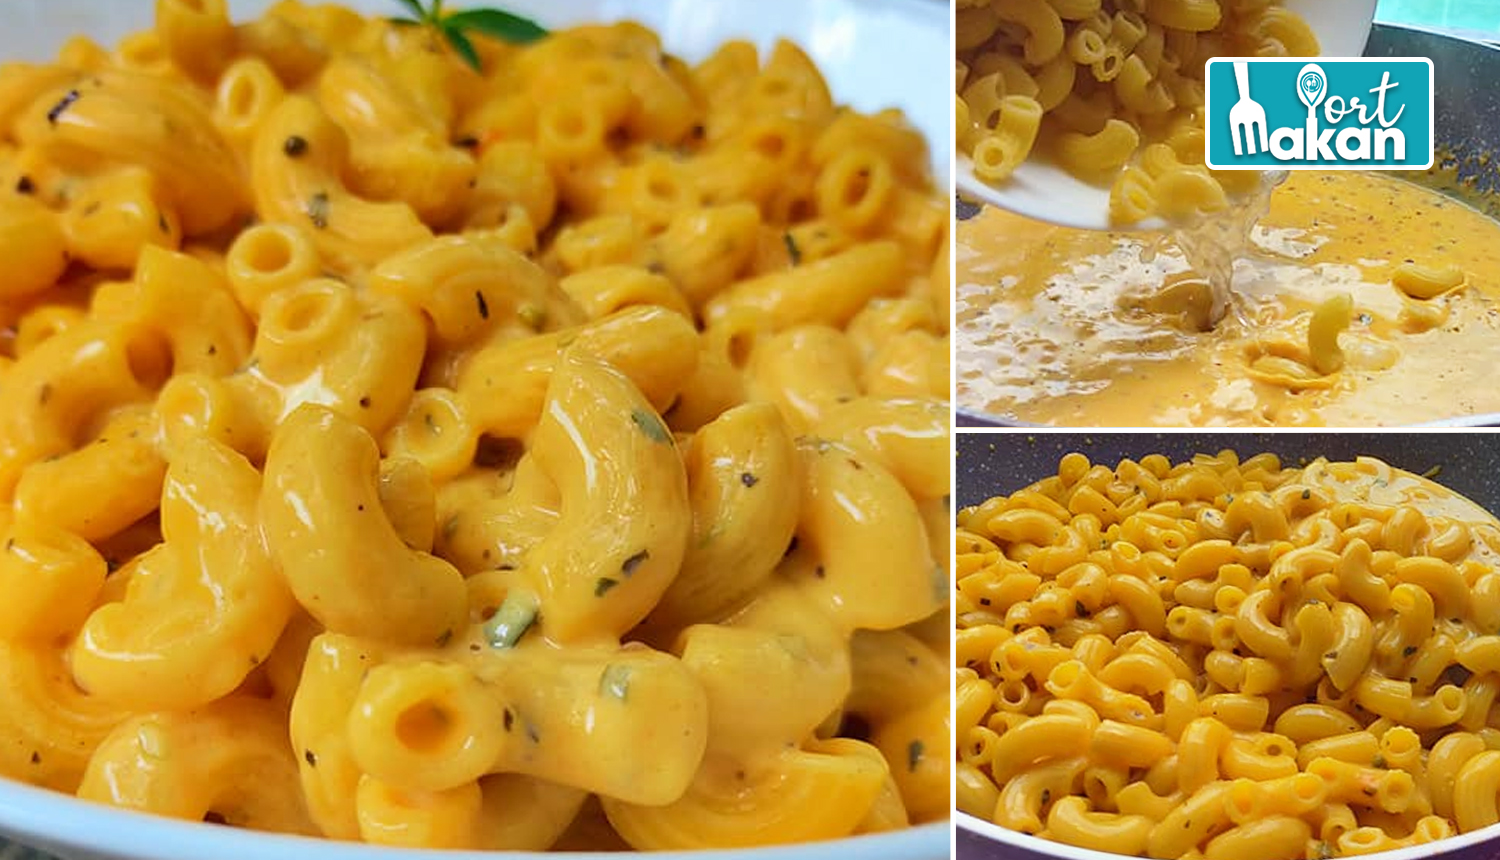 Resepi Macaroni Cheese Terlajak Sedap. Ada Bahan Rahsia Untuk Rasa